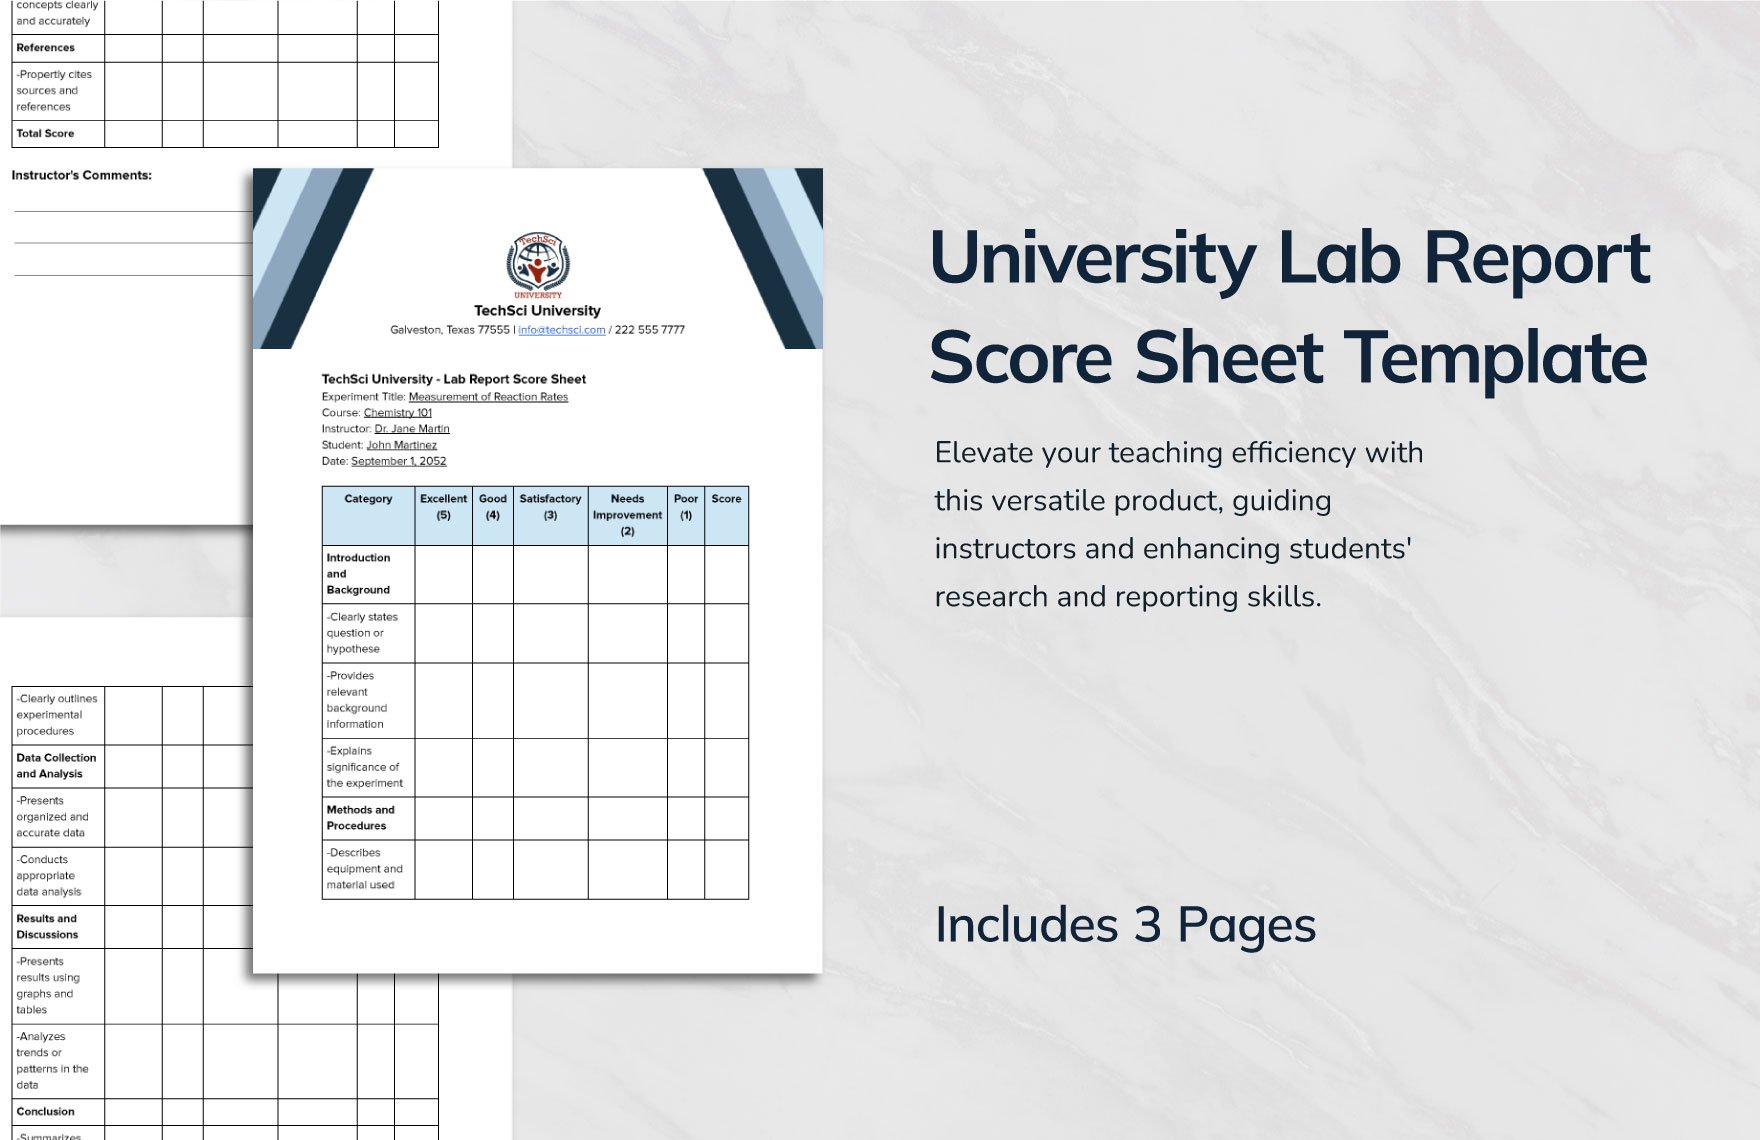 University Lab Report Score Sheet Template